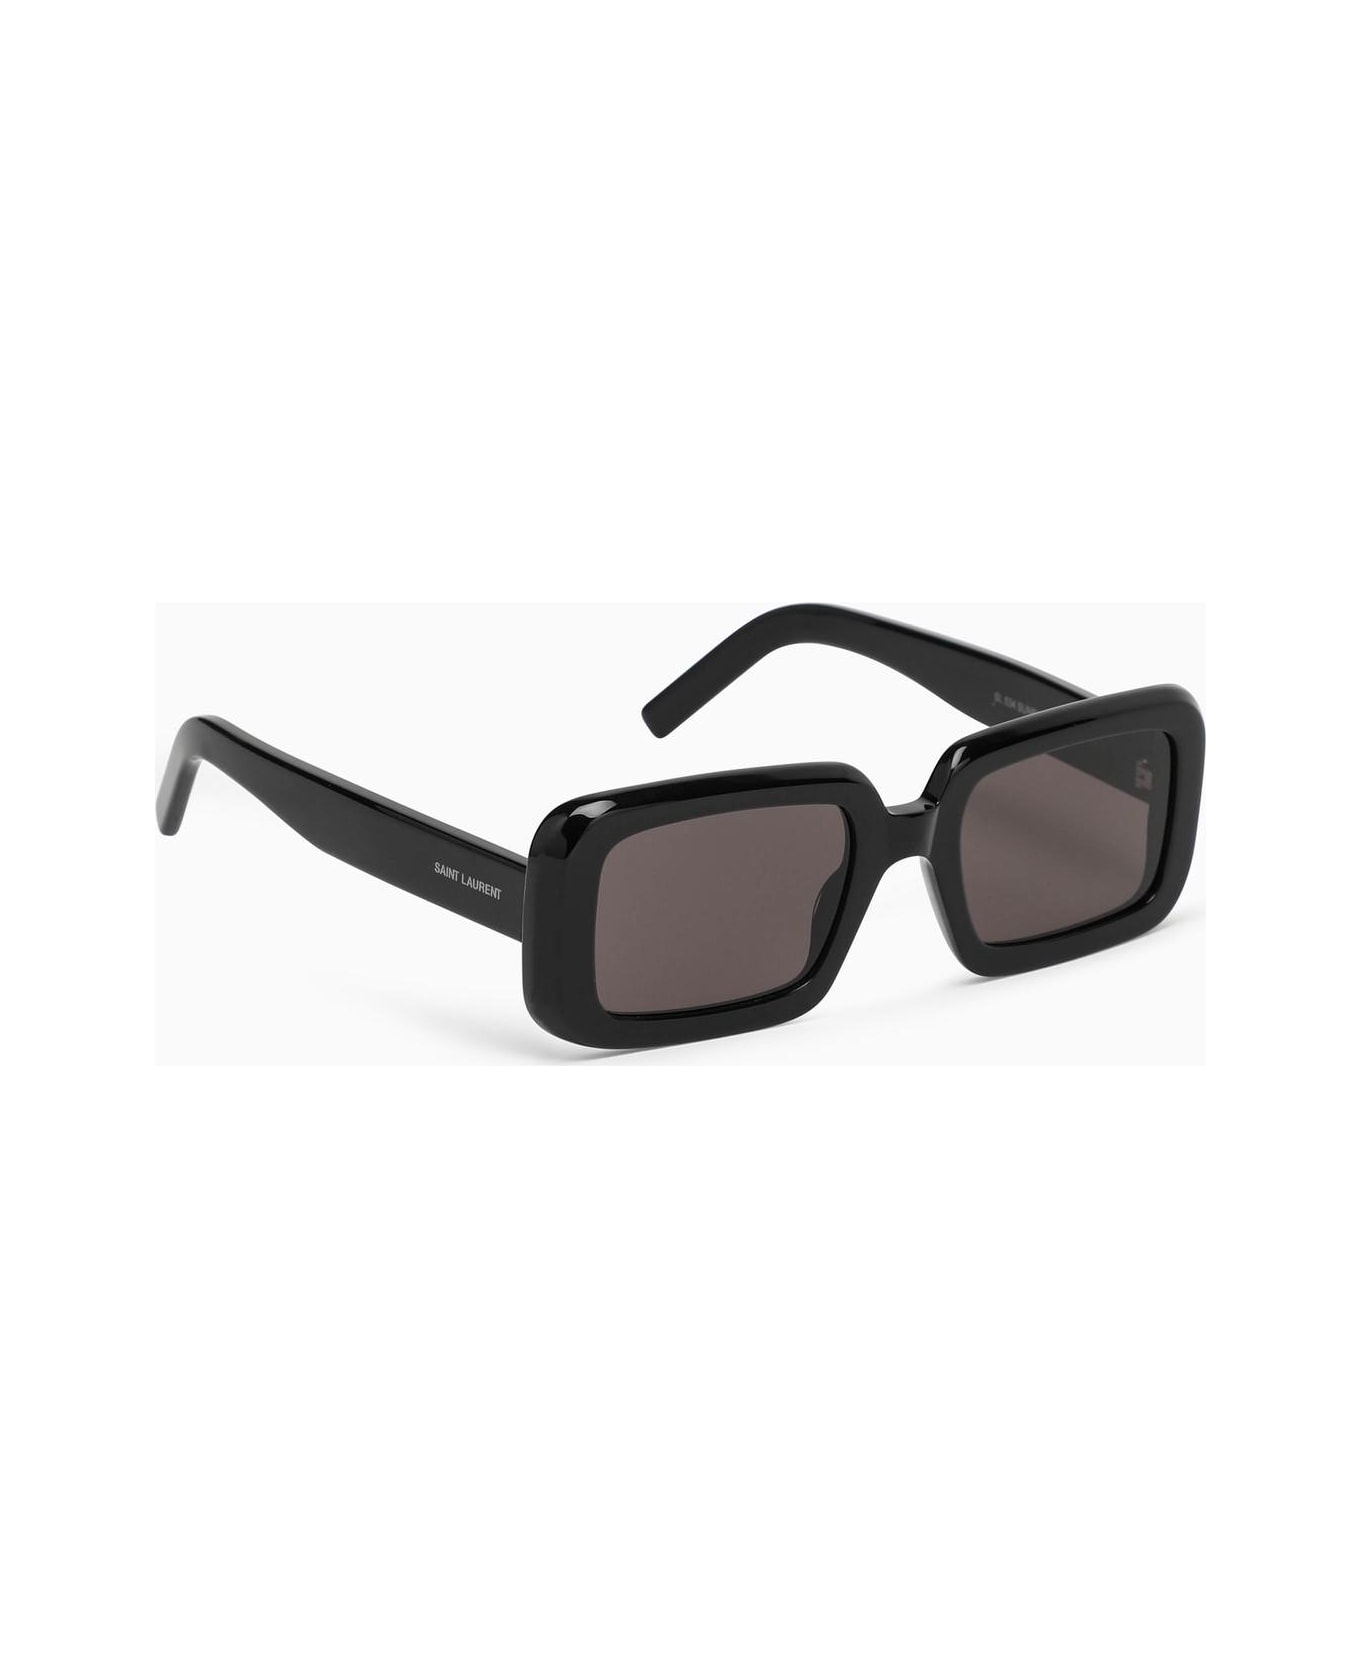 Saint Laurent Eyewear Black Sunglasses With Logo Lettering - Black